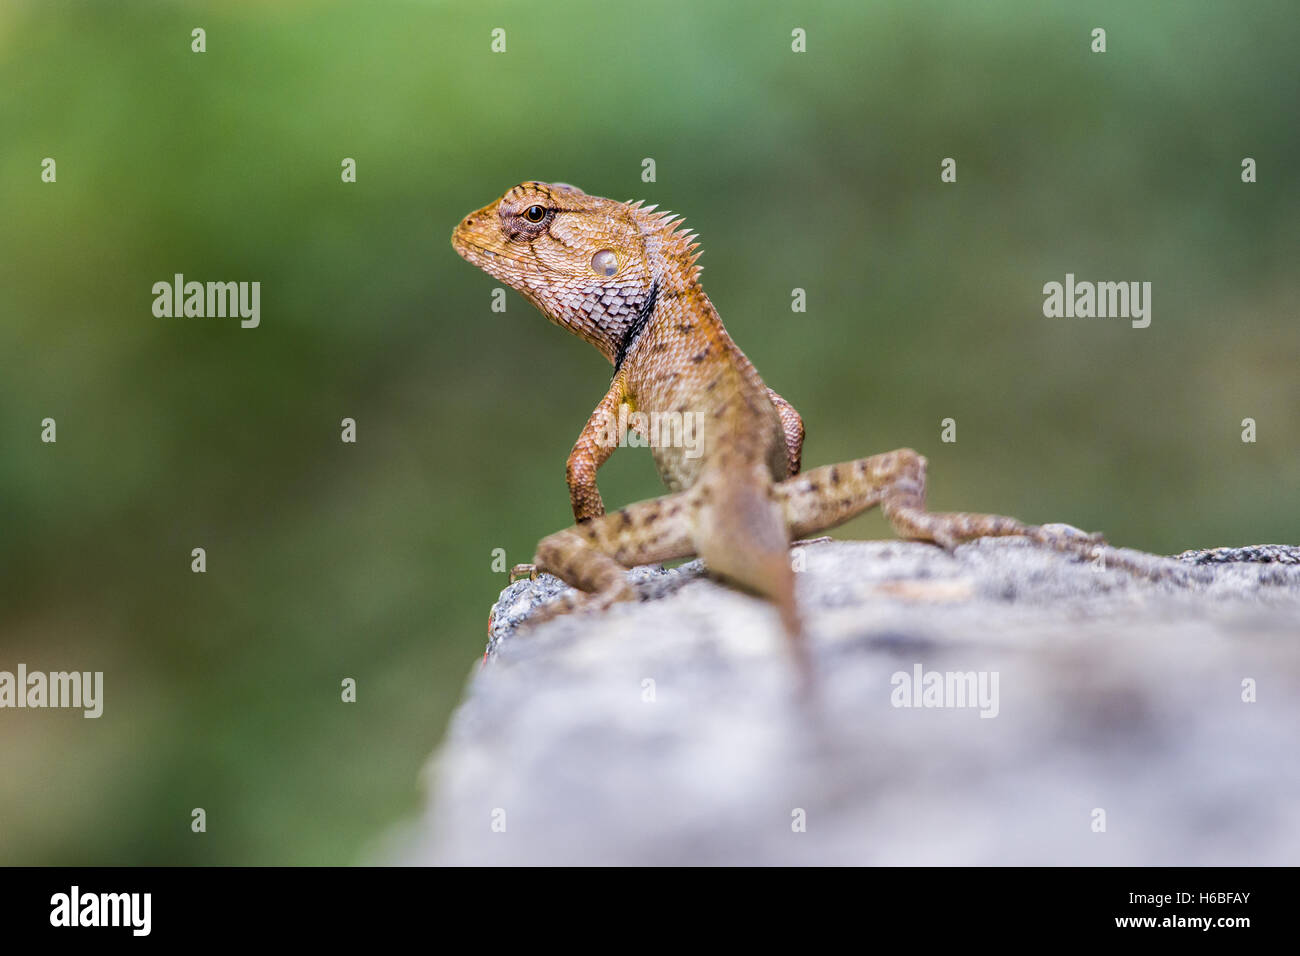 The oriental garden lizard Stock Photo